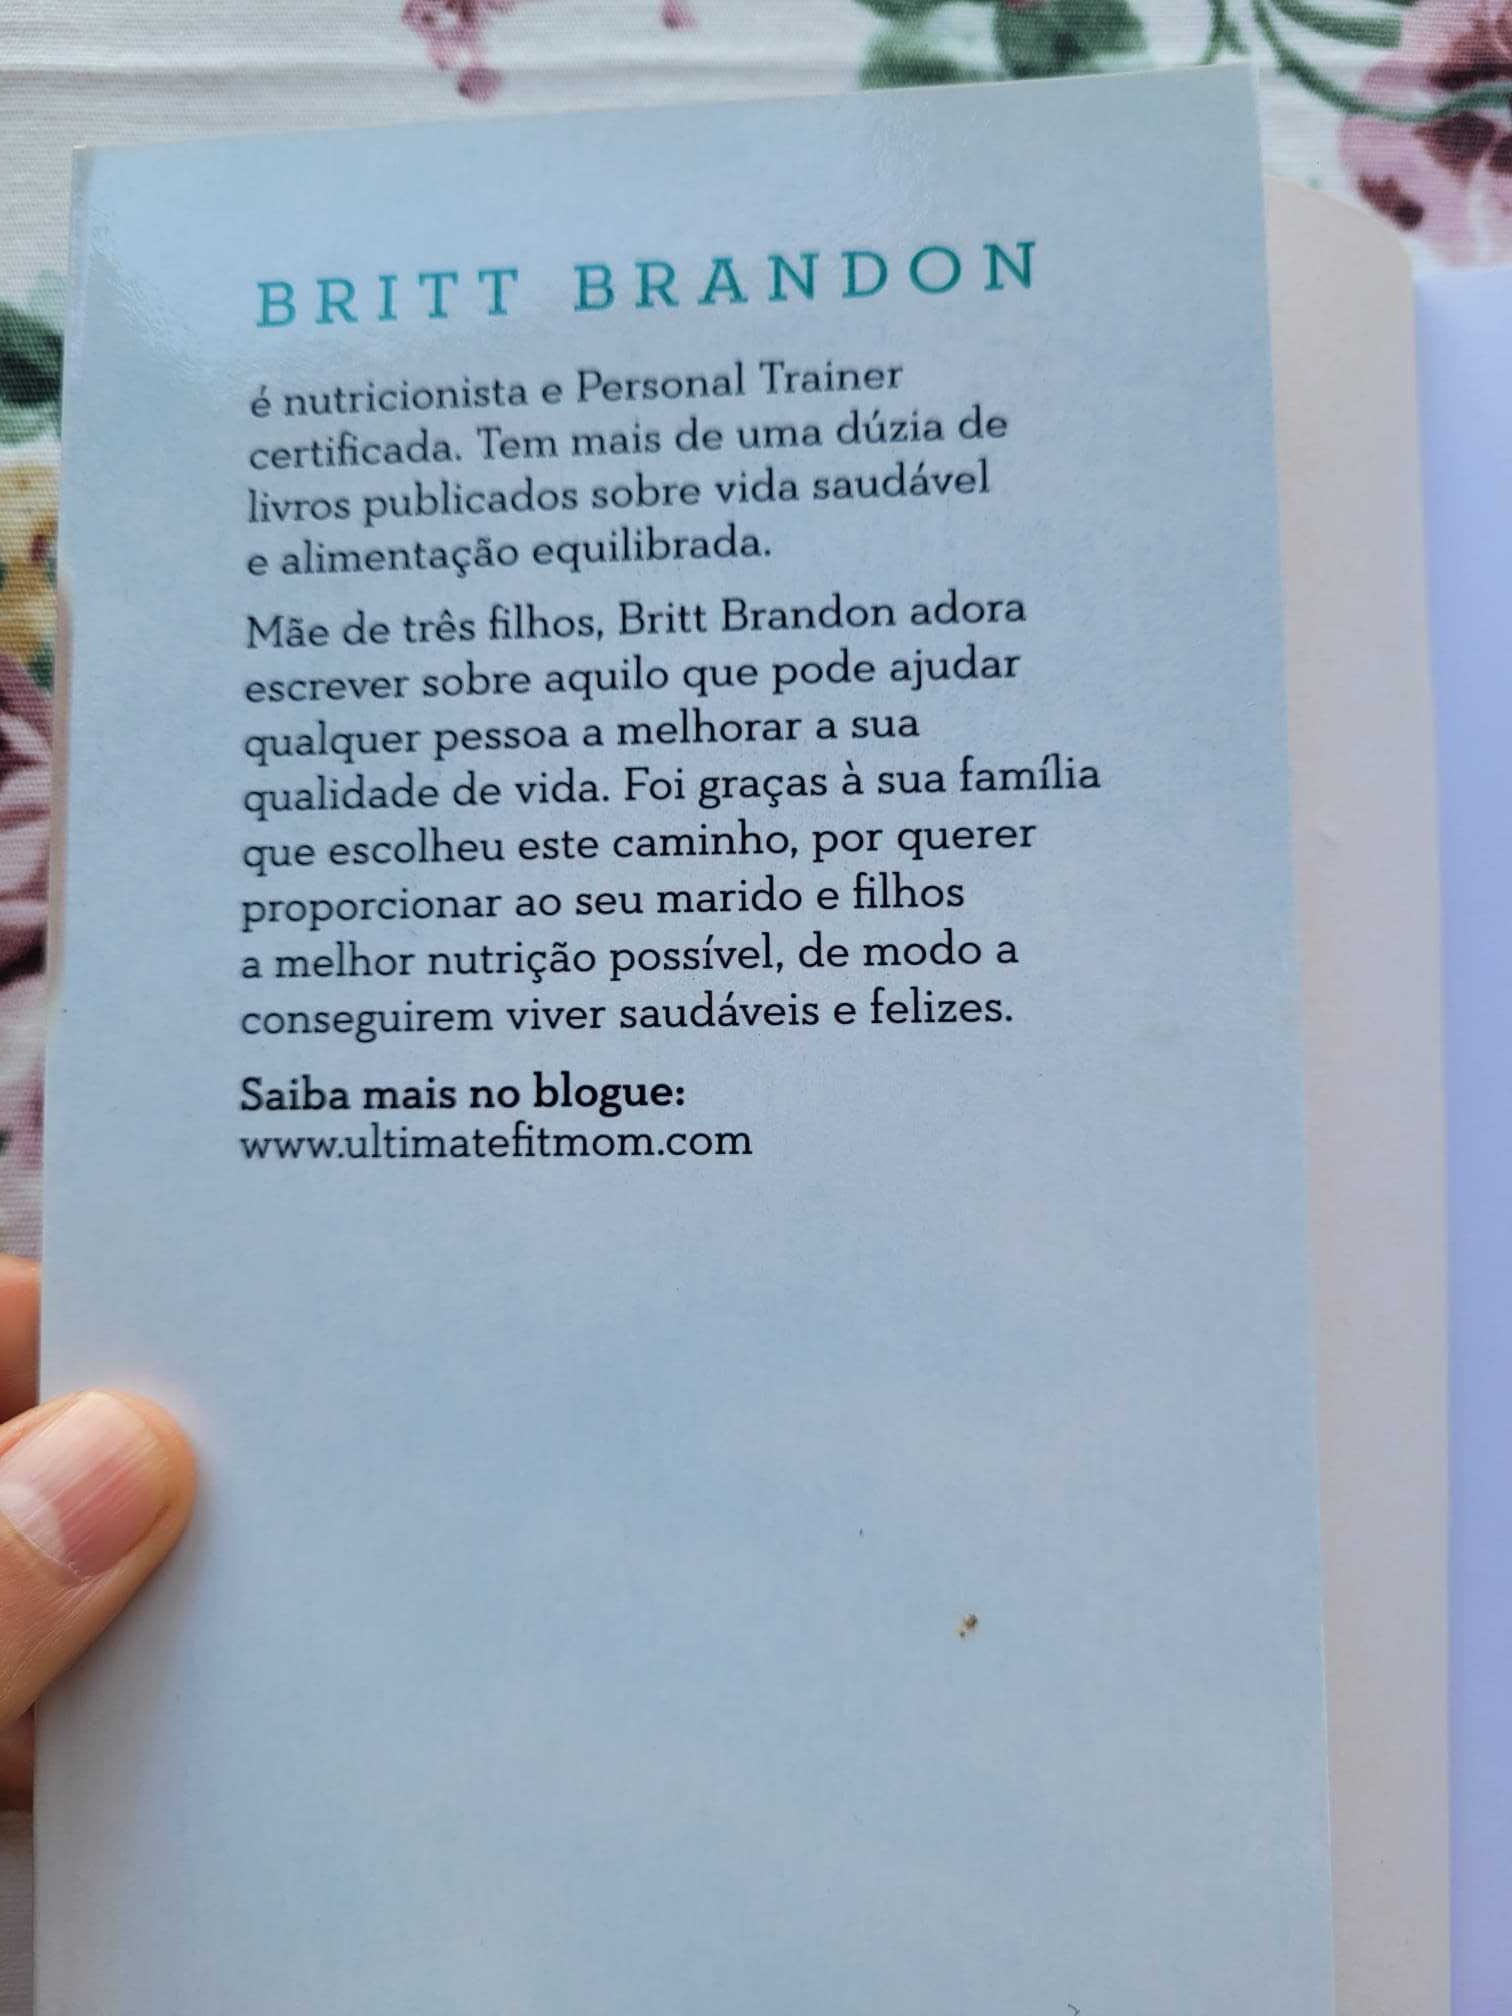 Livro "Sopas Detox" de Britt Brandon - NOVO